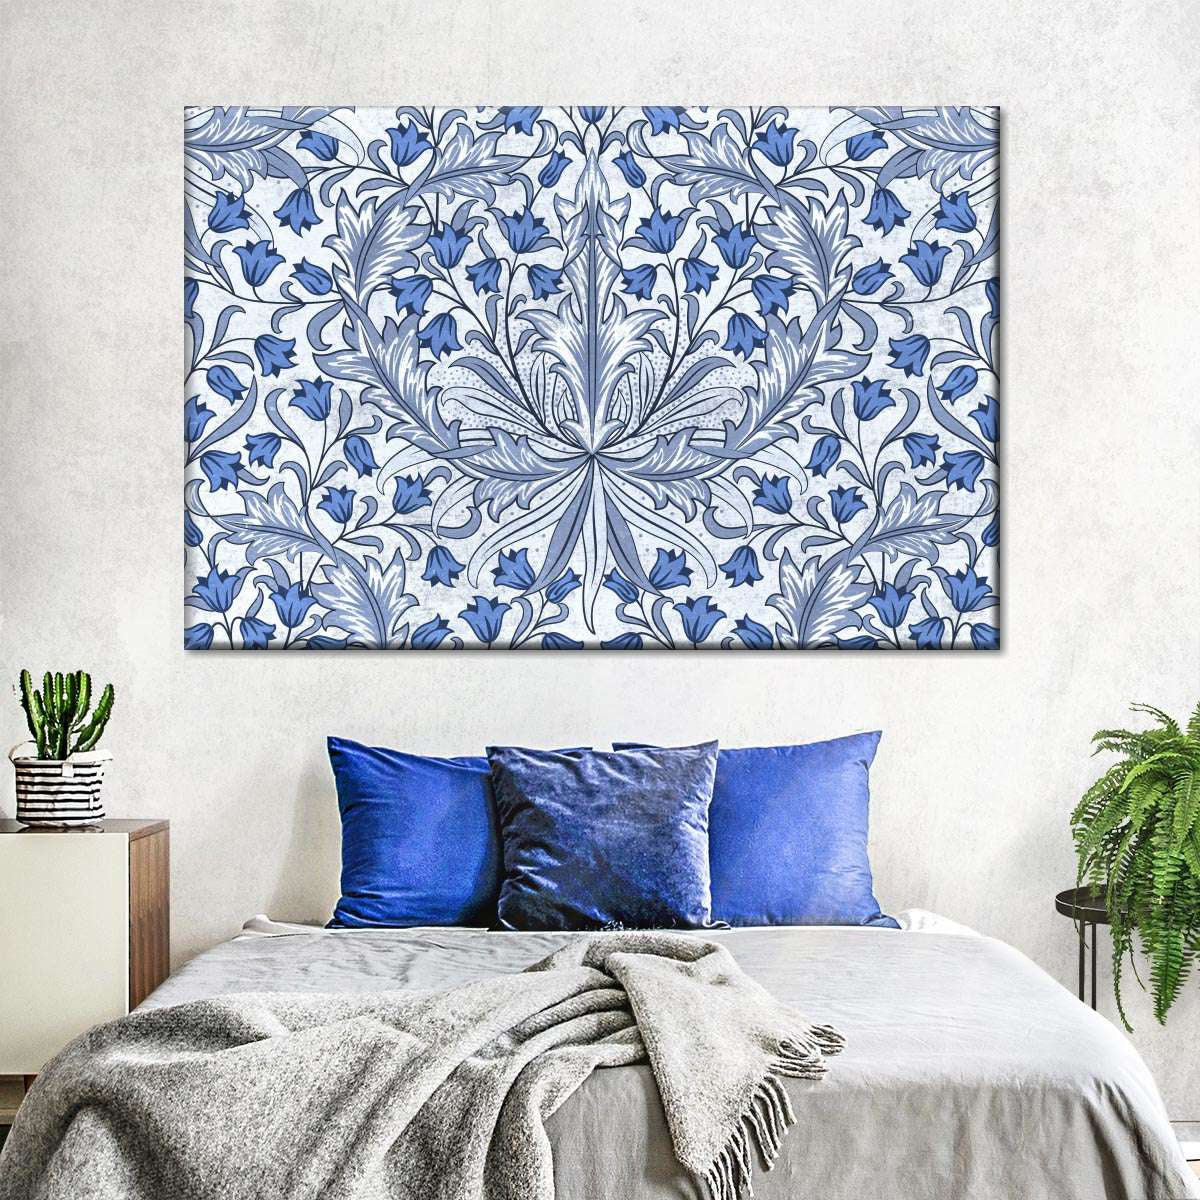 Blue bedroom wall ideas